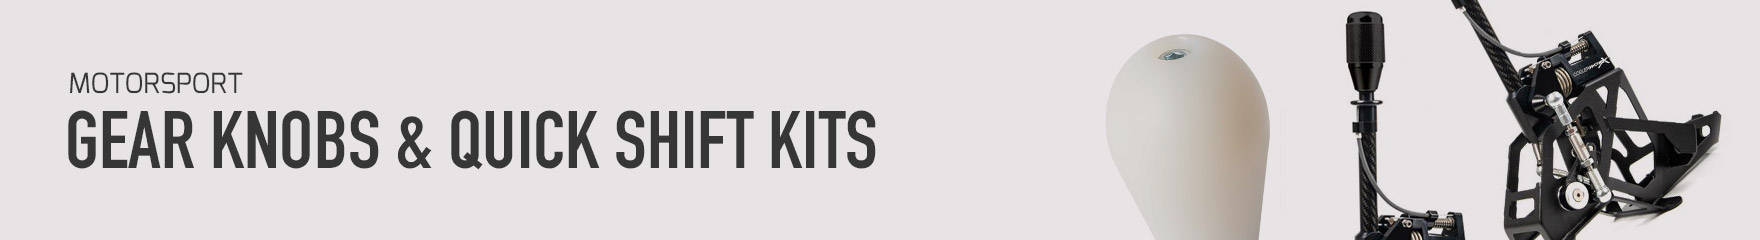 Gear Knobs & Quick Shift Kits